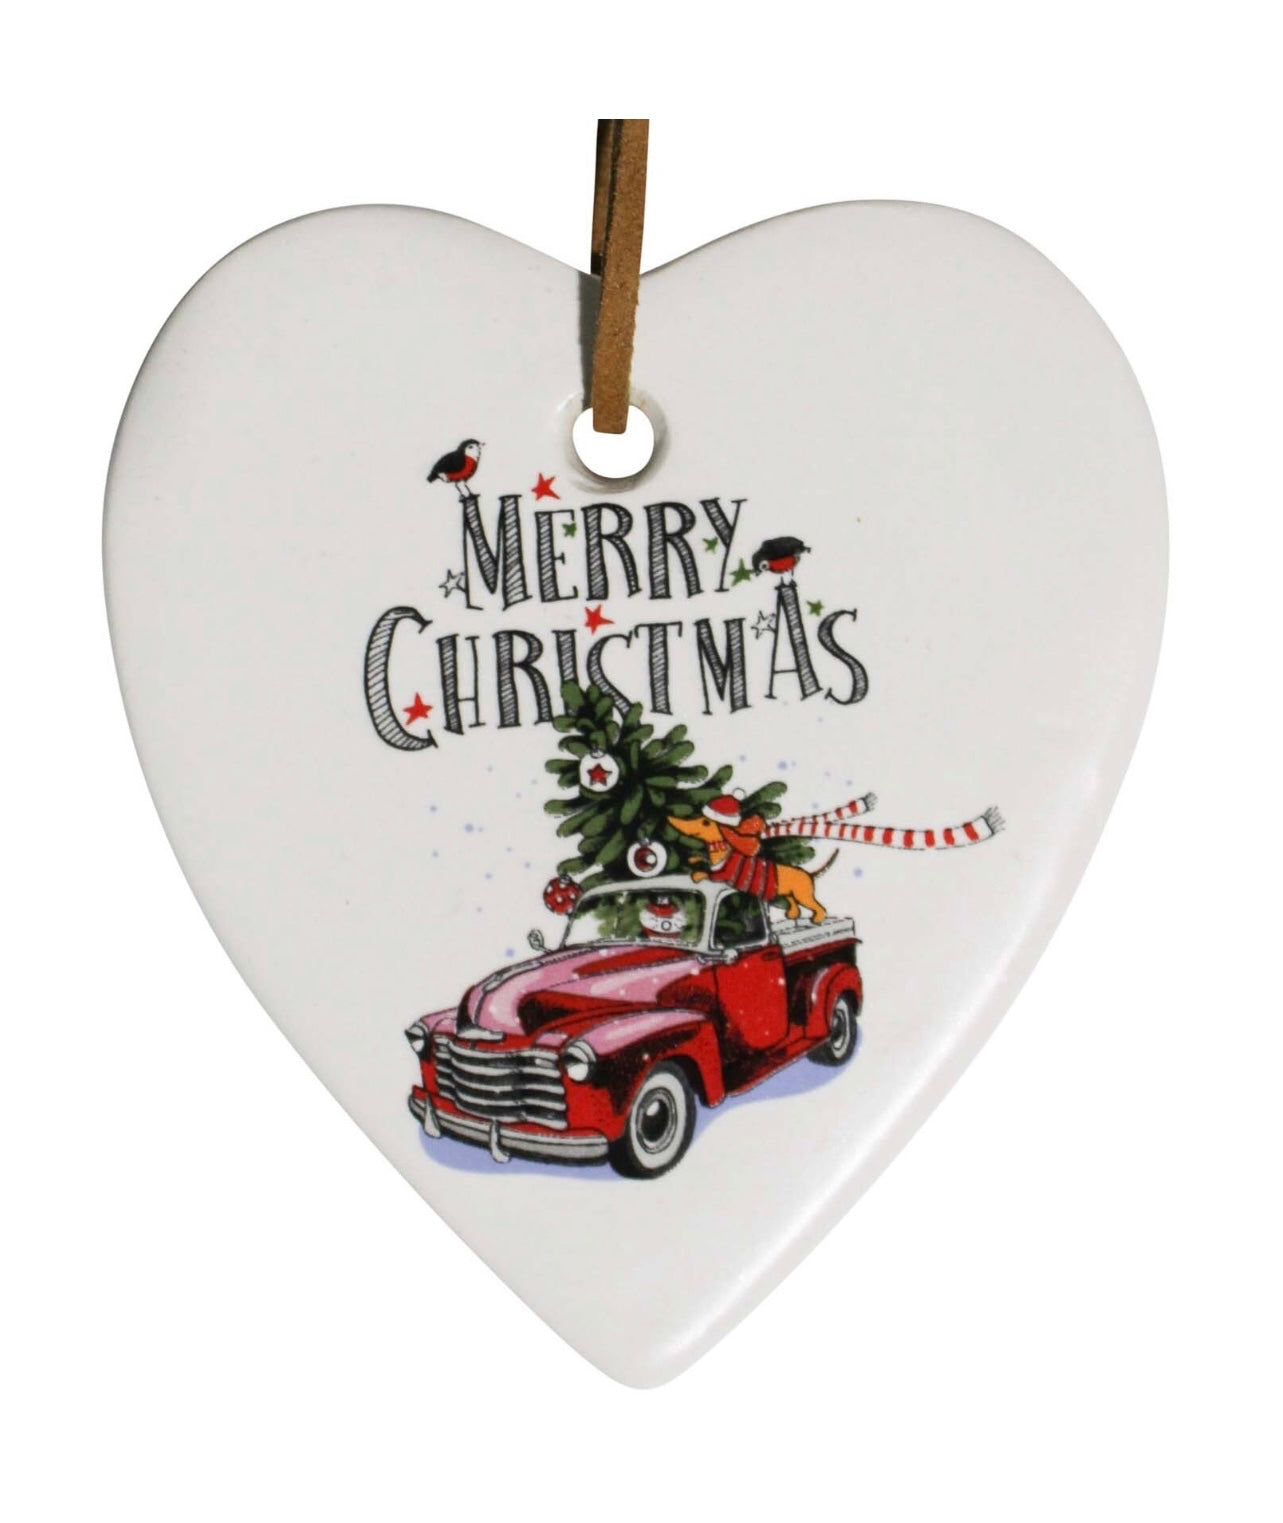 ‘Merry Christmas' Ute Hanging Heart Ornament